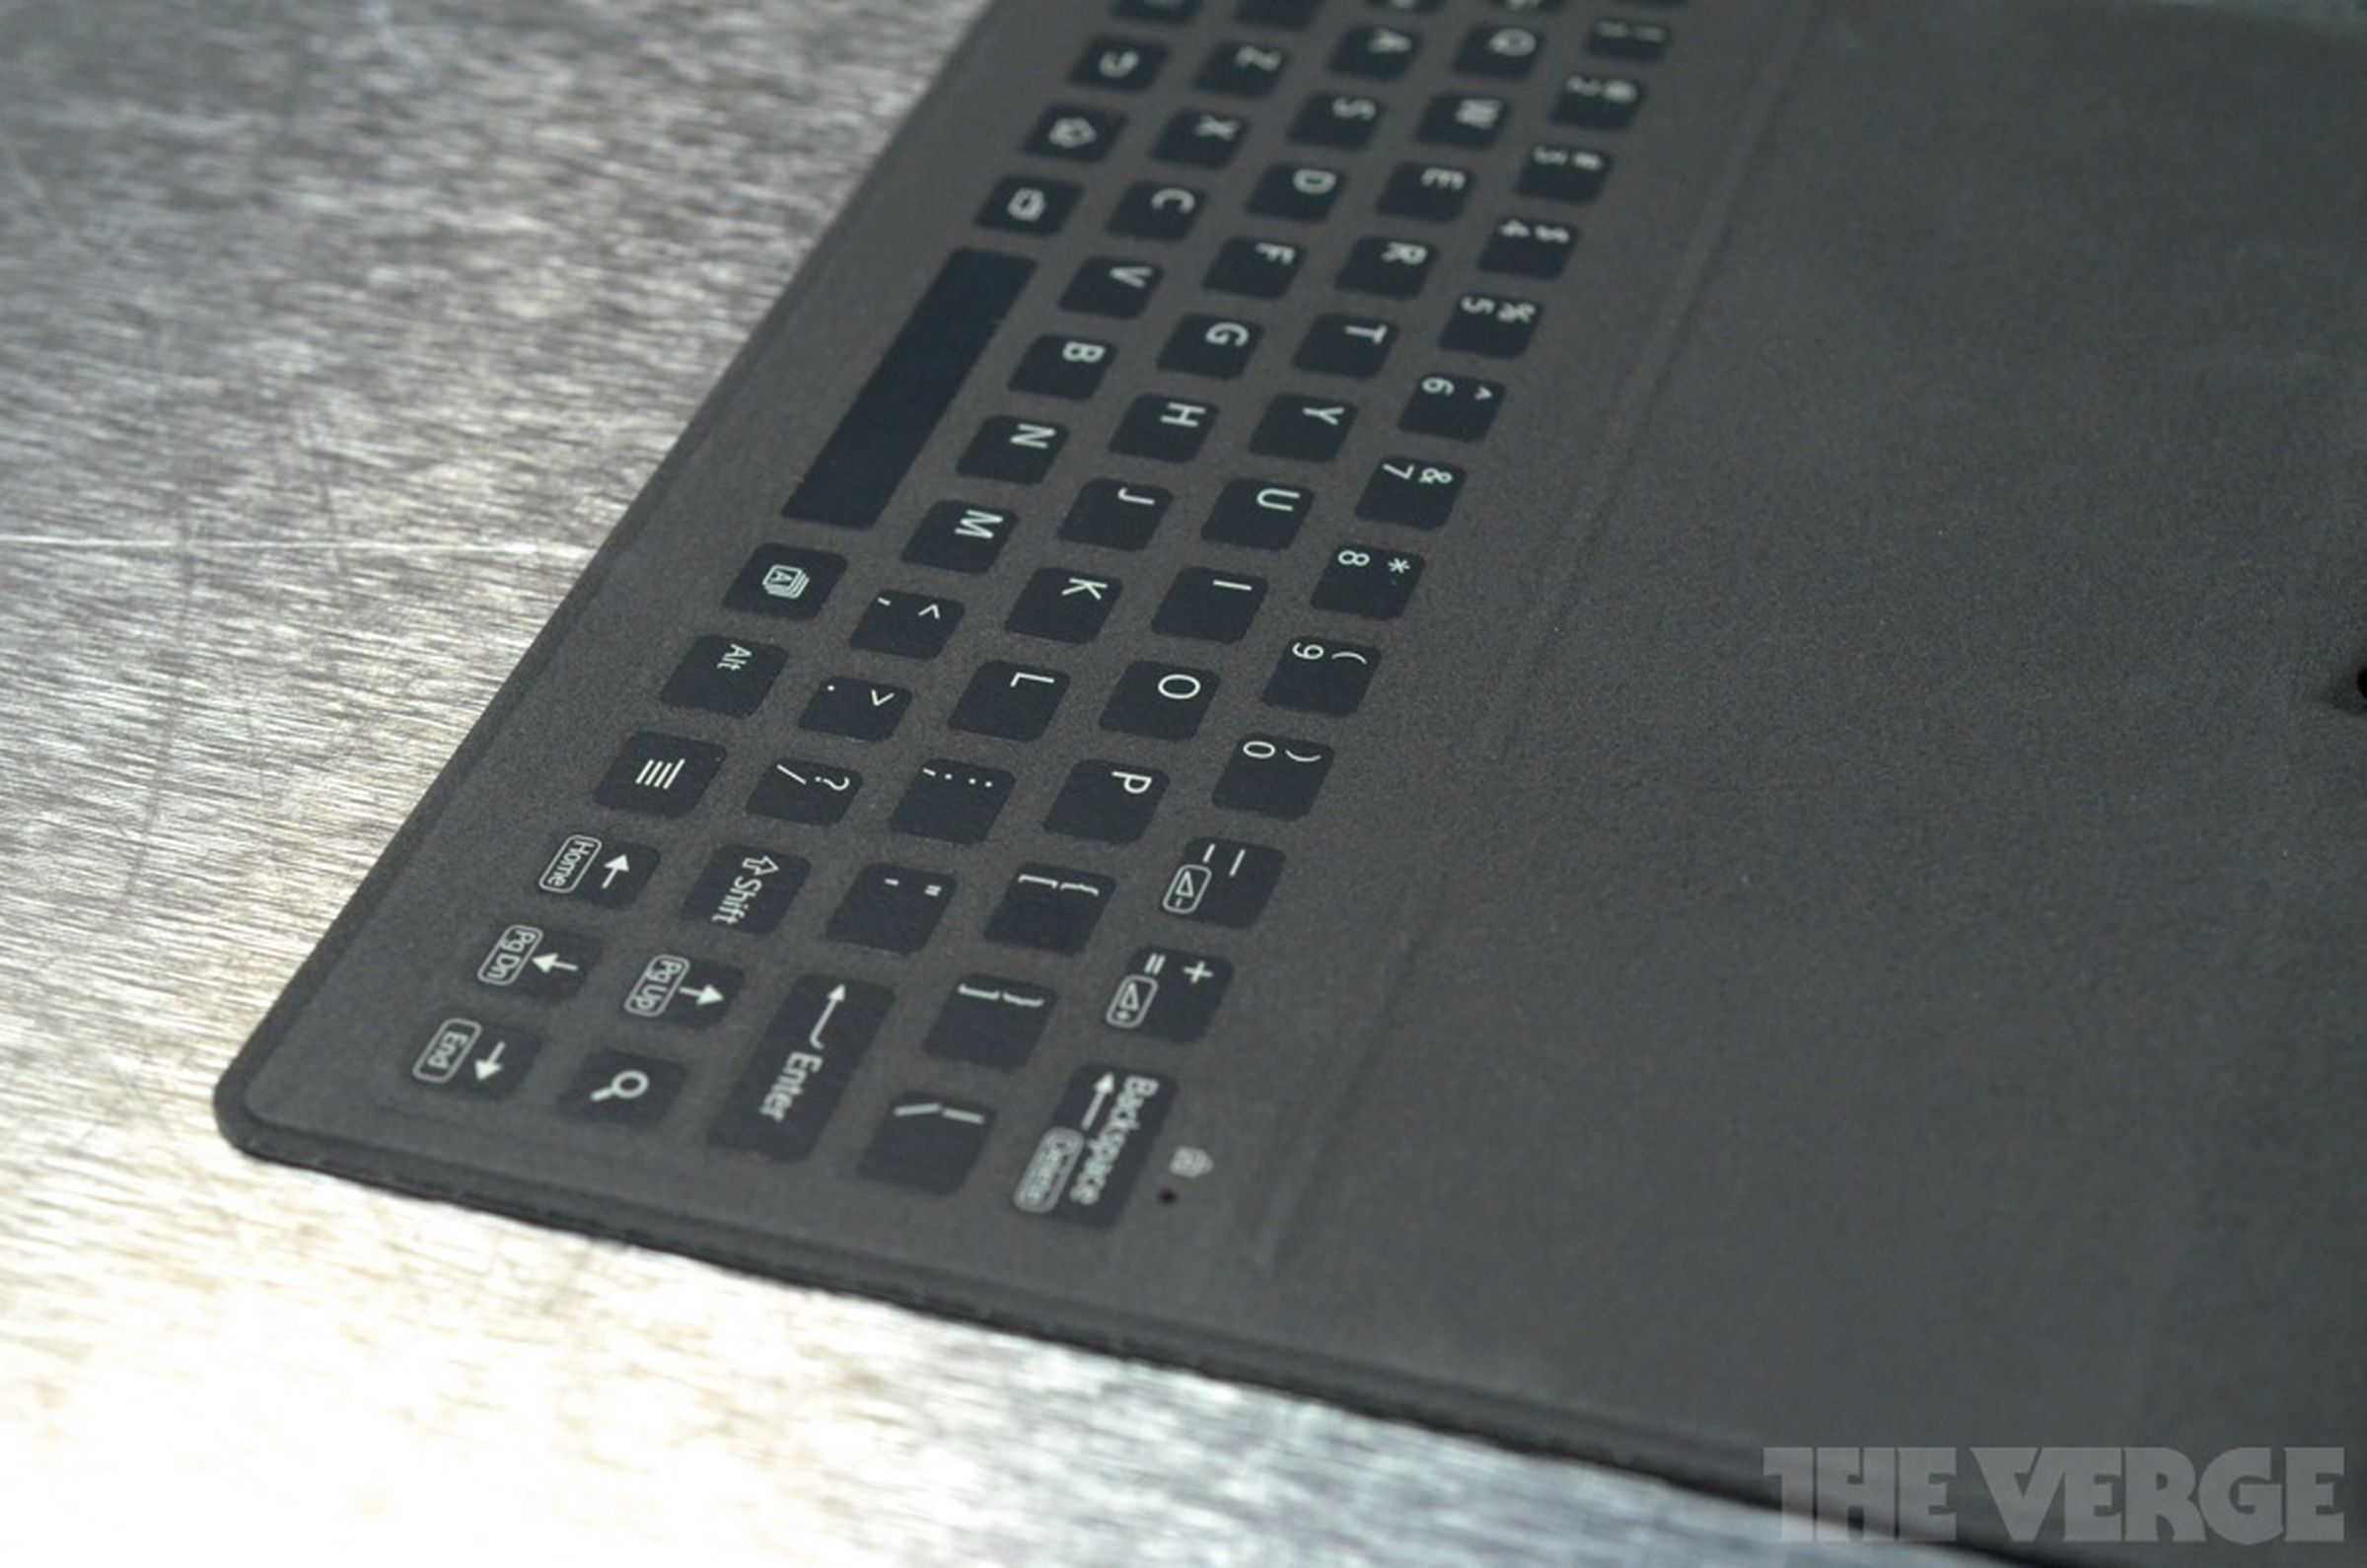 Sony Tablet S keyboard case hands-on